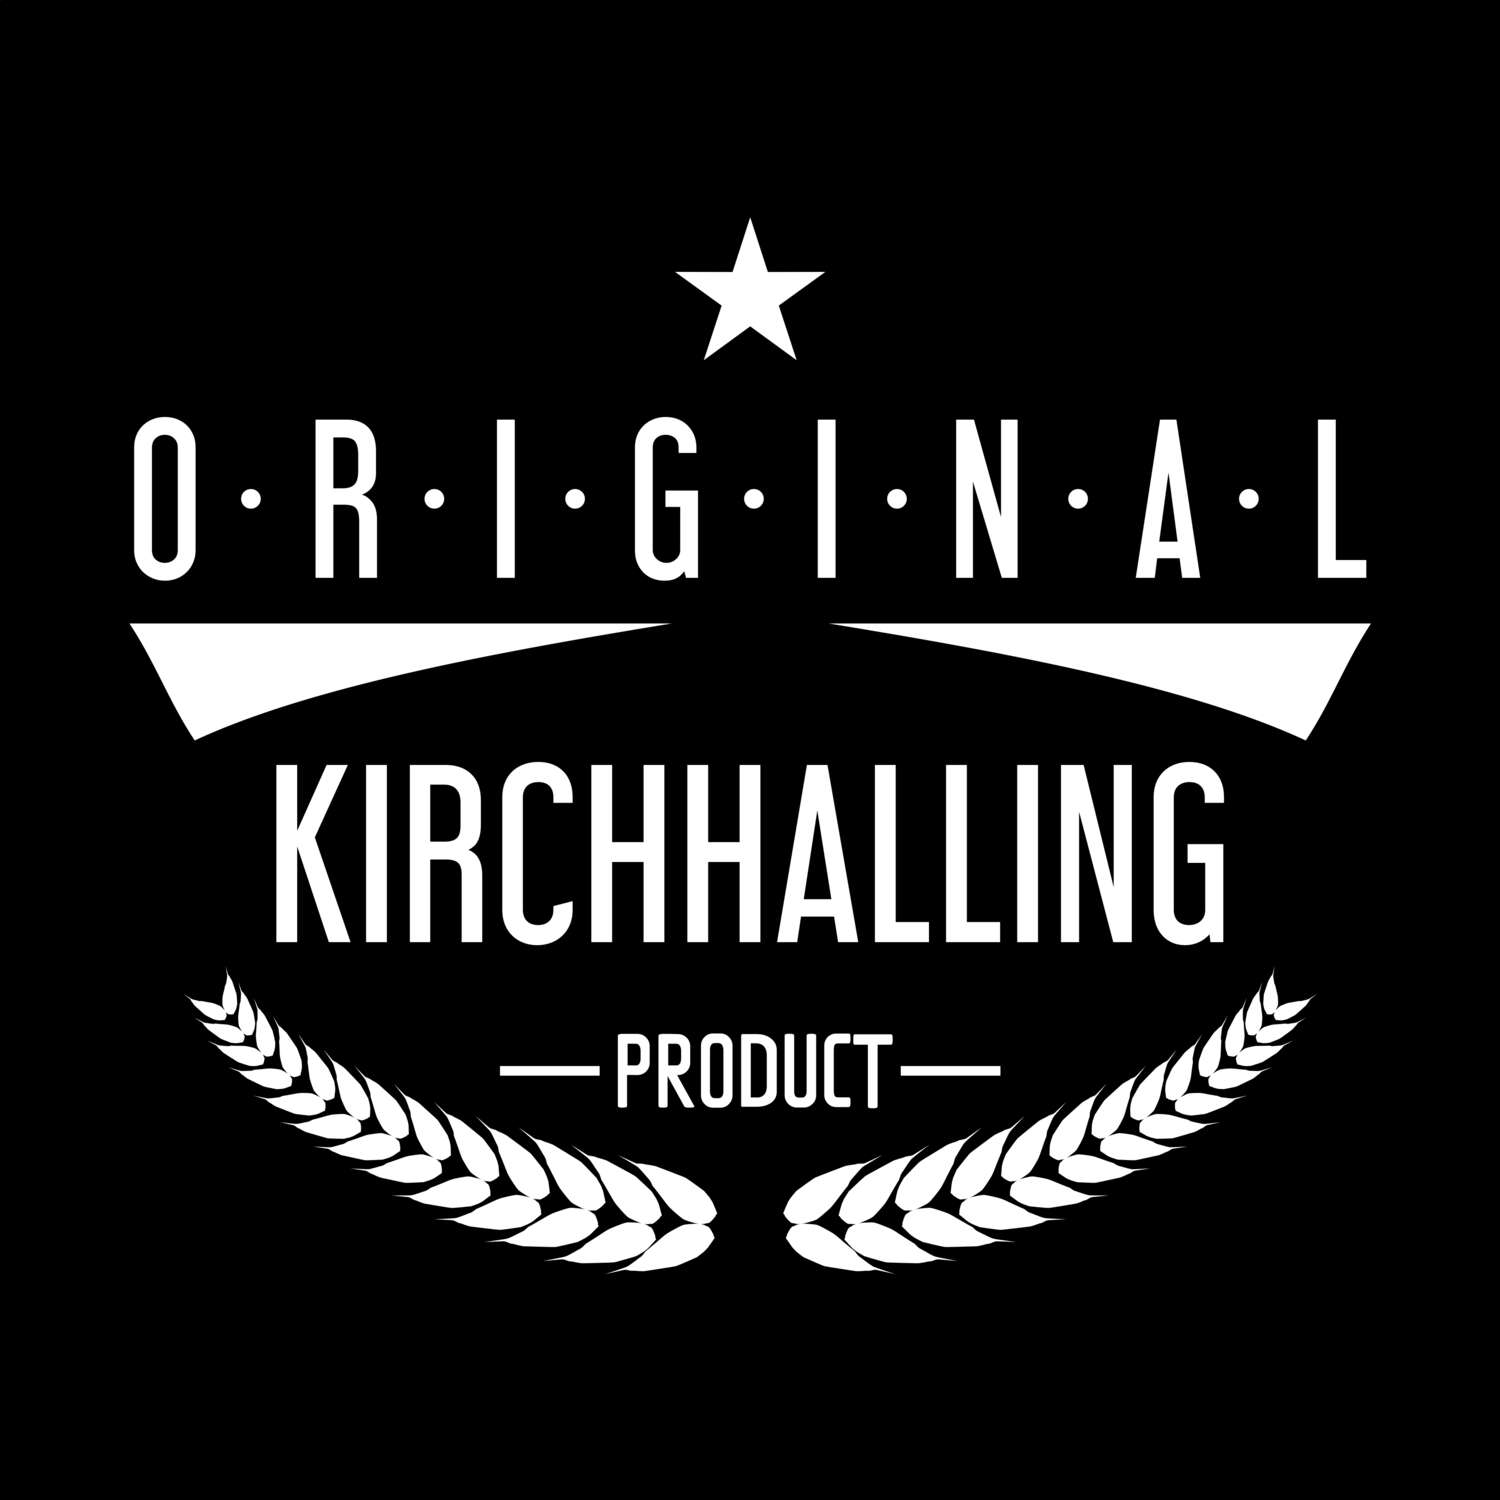 Kirchhalling T-Shirt »Original Product«